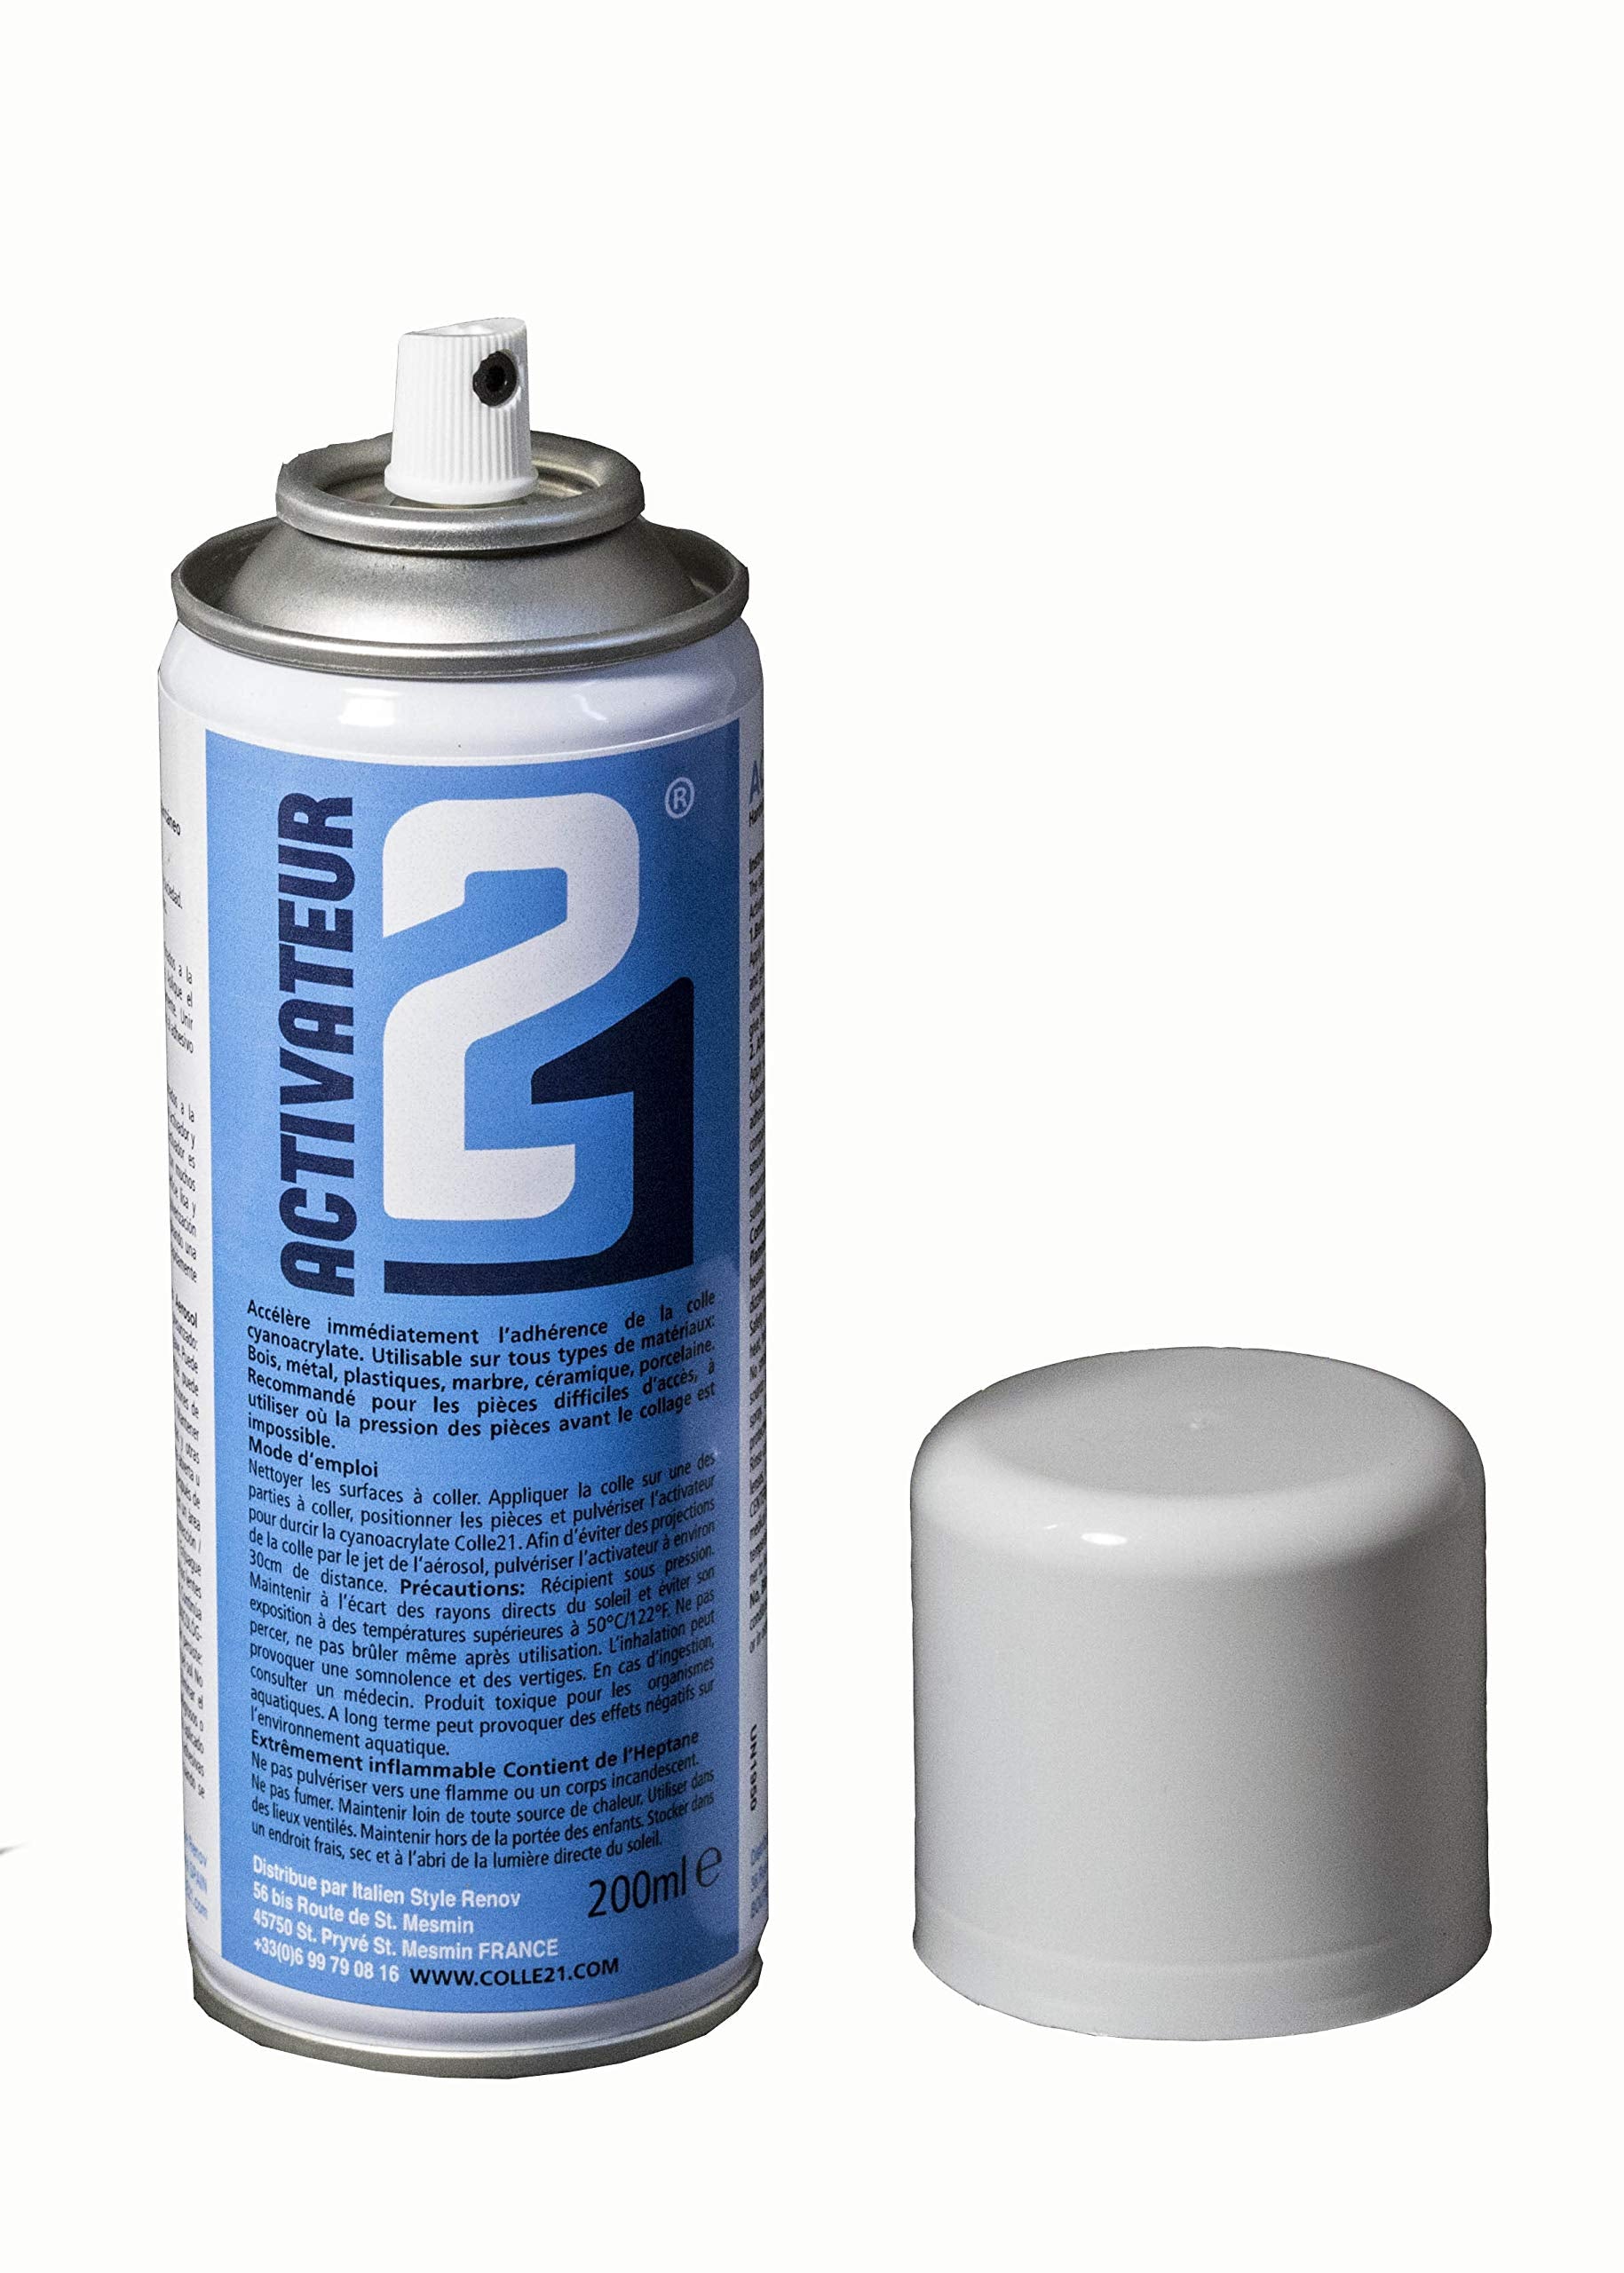 Activator21 Spray - 200ml - Para acelerar el pegado de Colle21, Cyanoacrylato Super Glue.